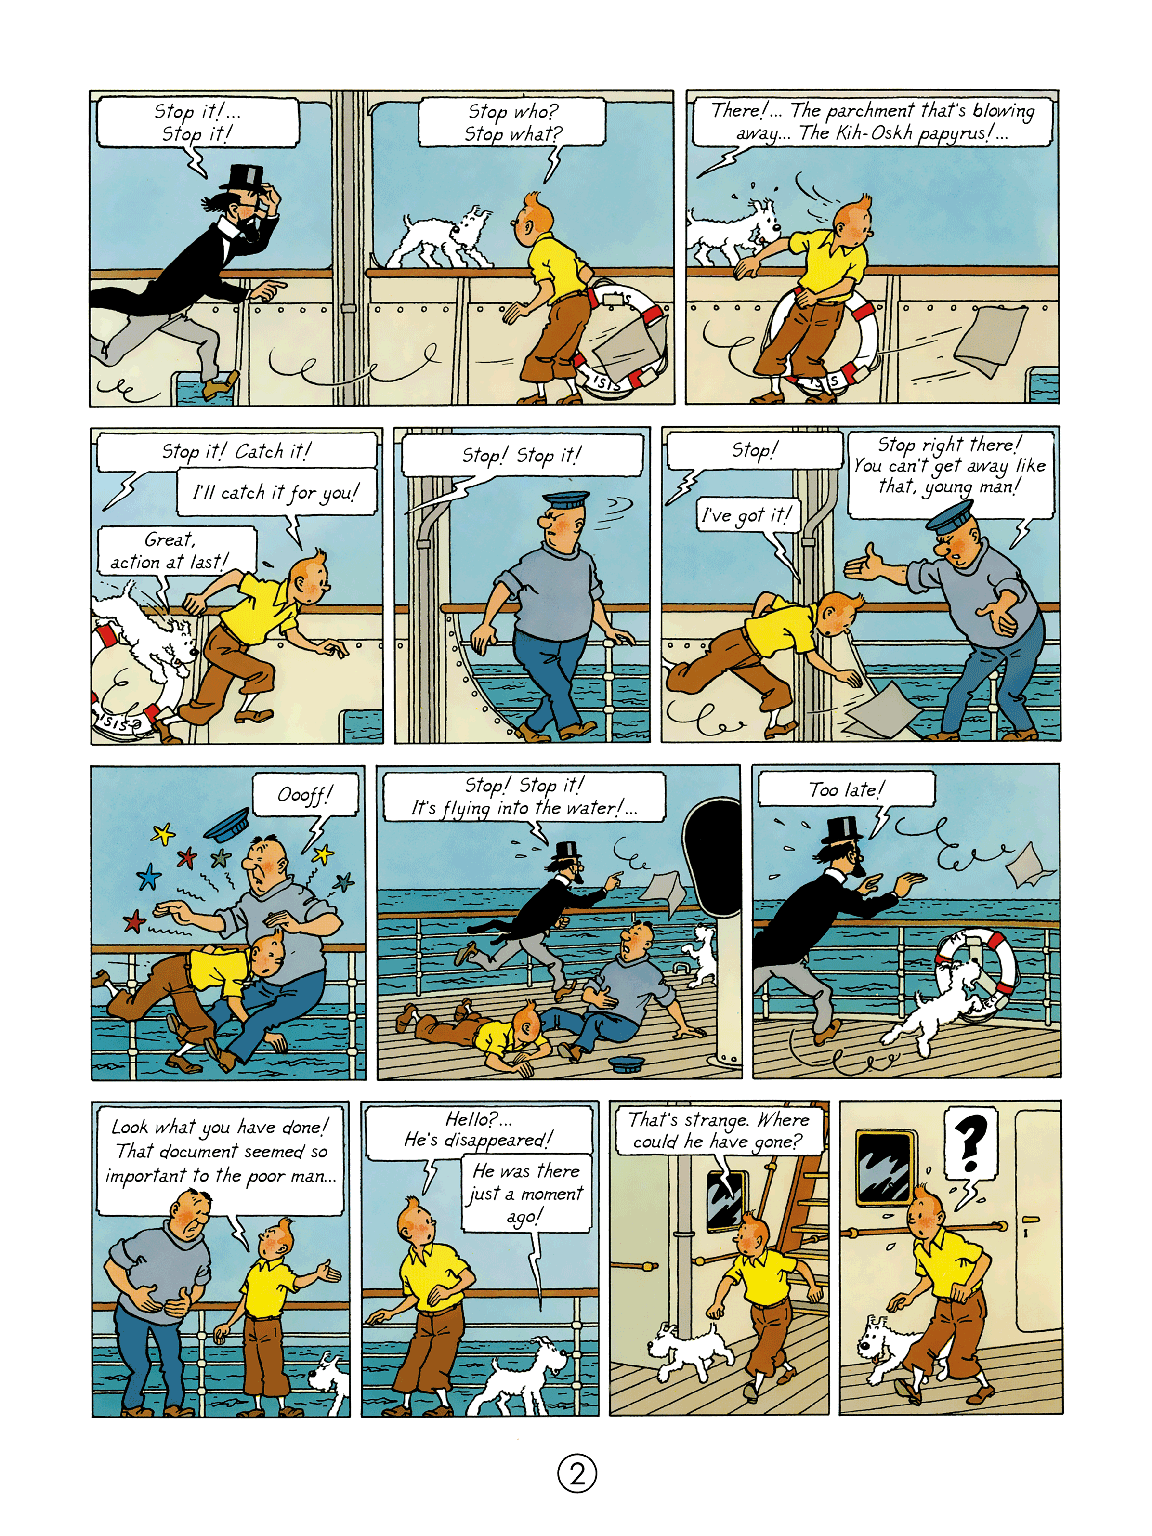  کتاب Tintin Cigars of the Pharaoh by Hergé